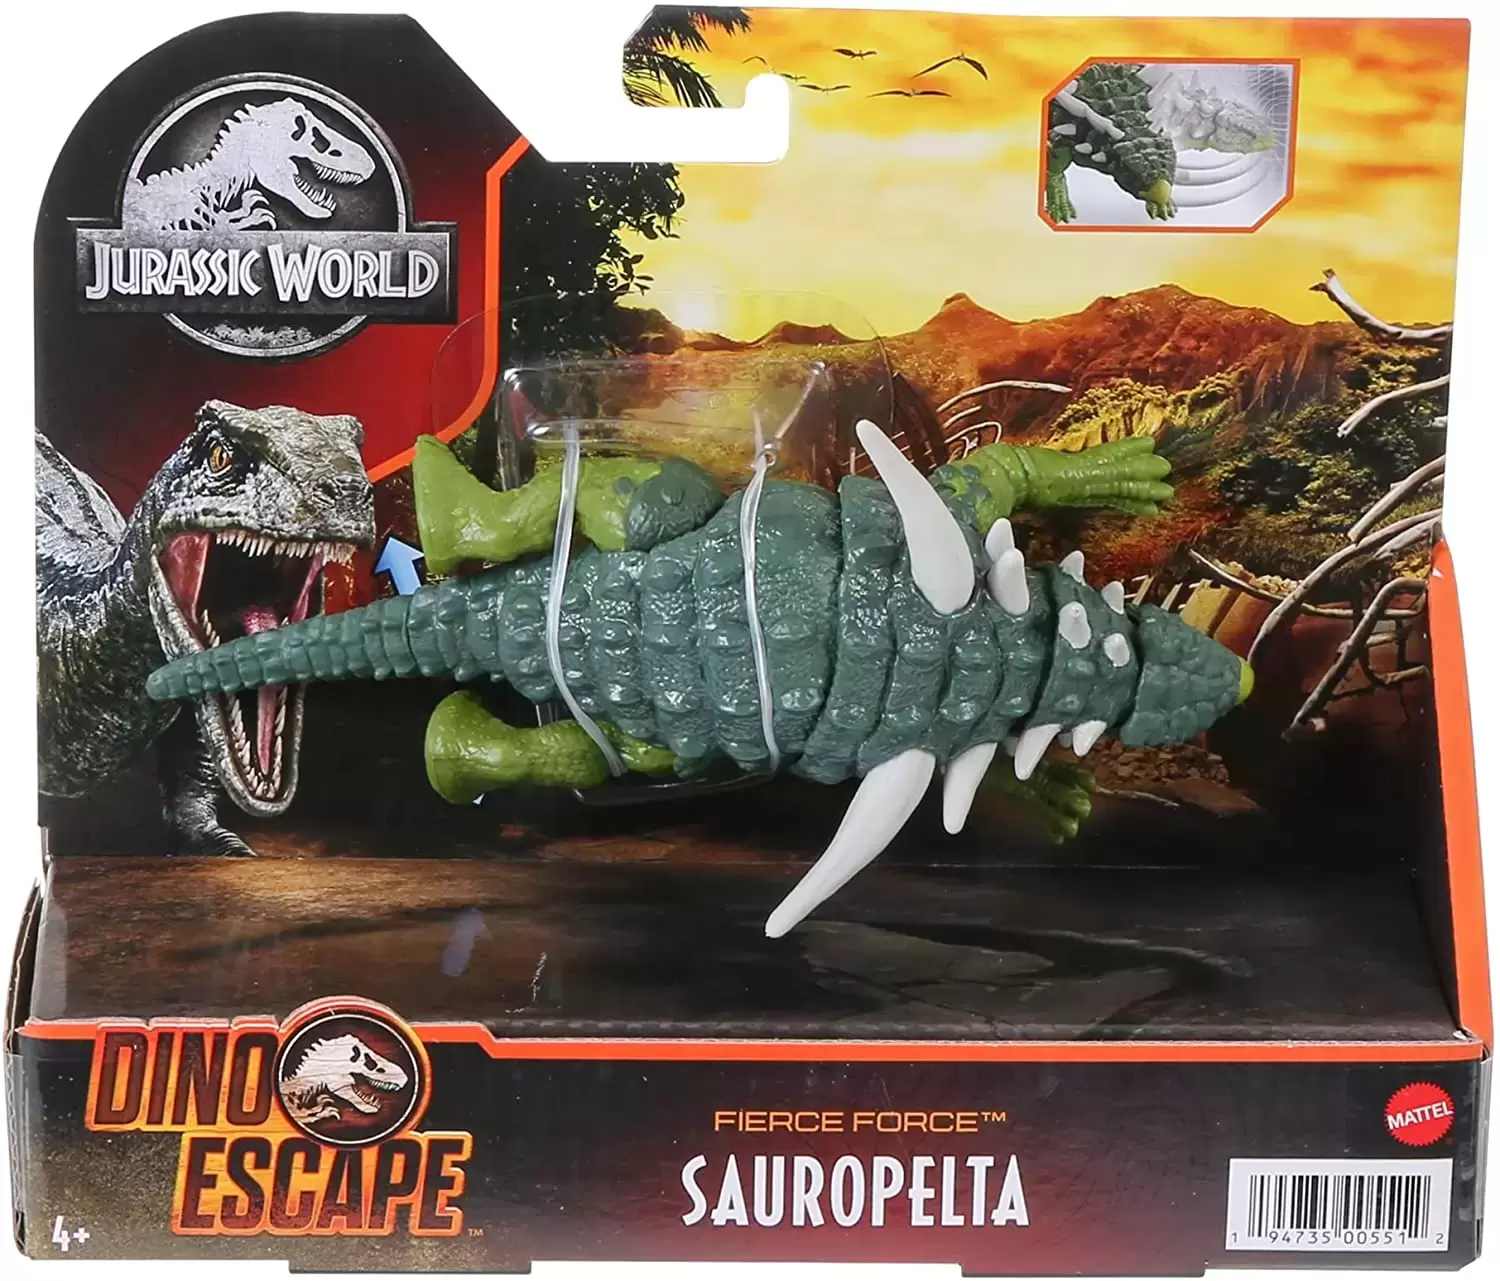 Jurassic World : Camp Cretaceous / Dino Escape - Sauropelta - Fierce Force